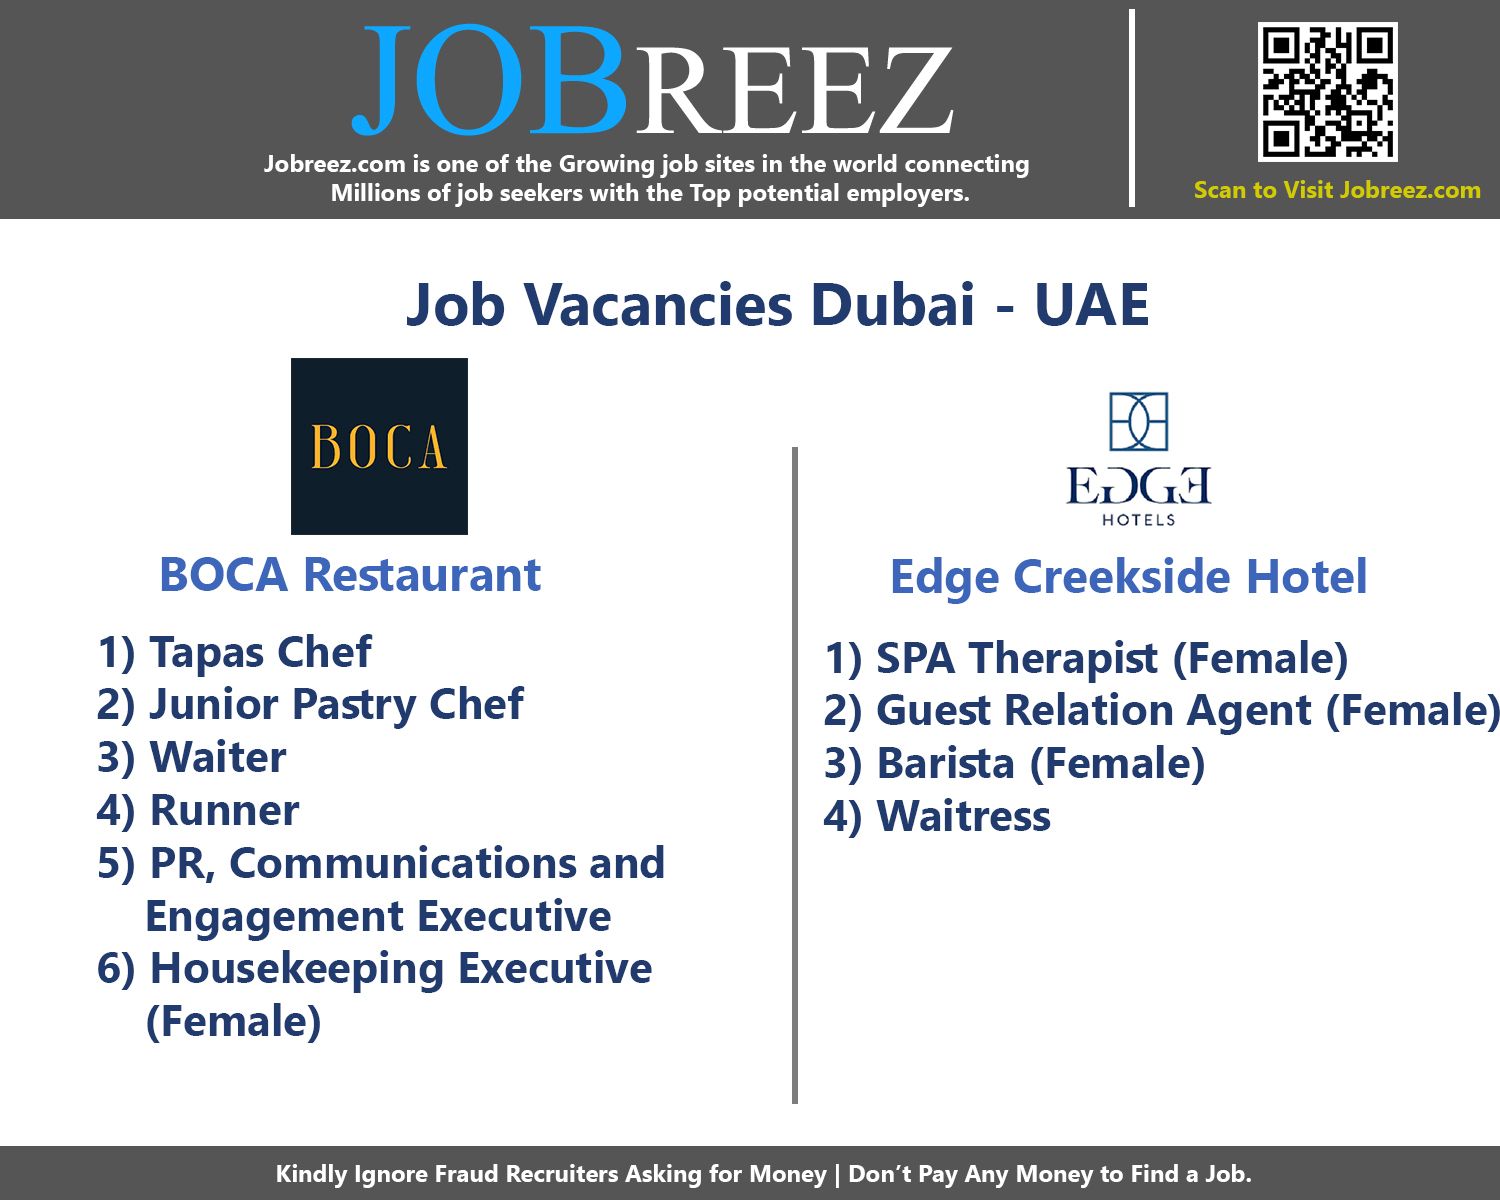 Edge Creekside Hotel - Multiple Vacancies in Dubai, UAE